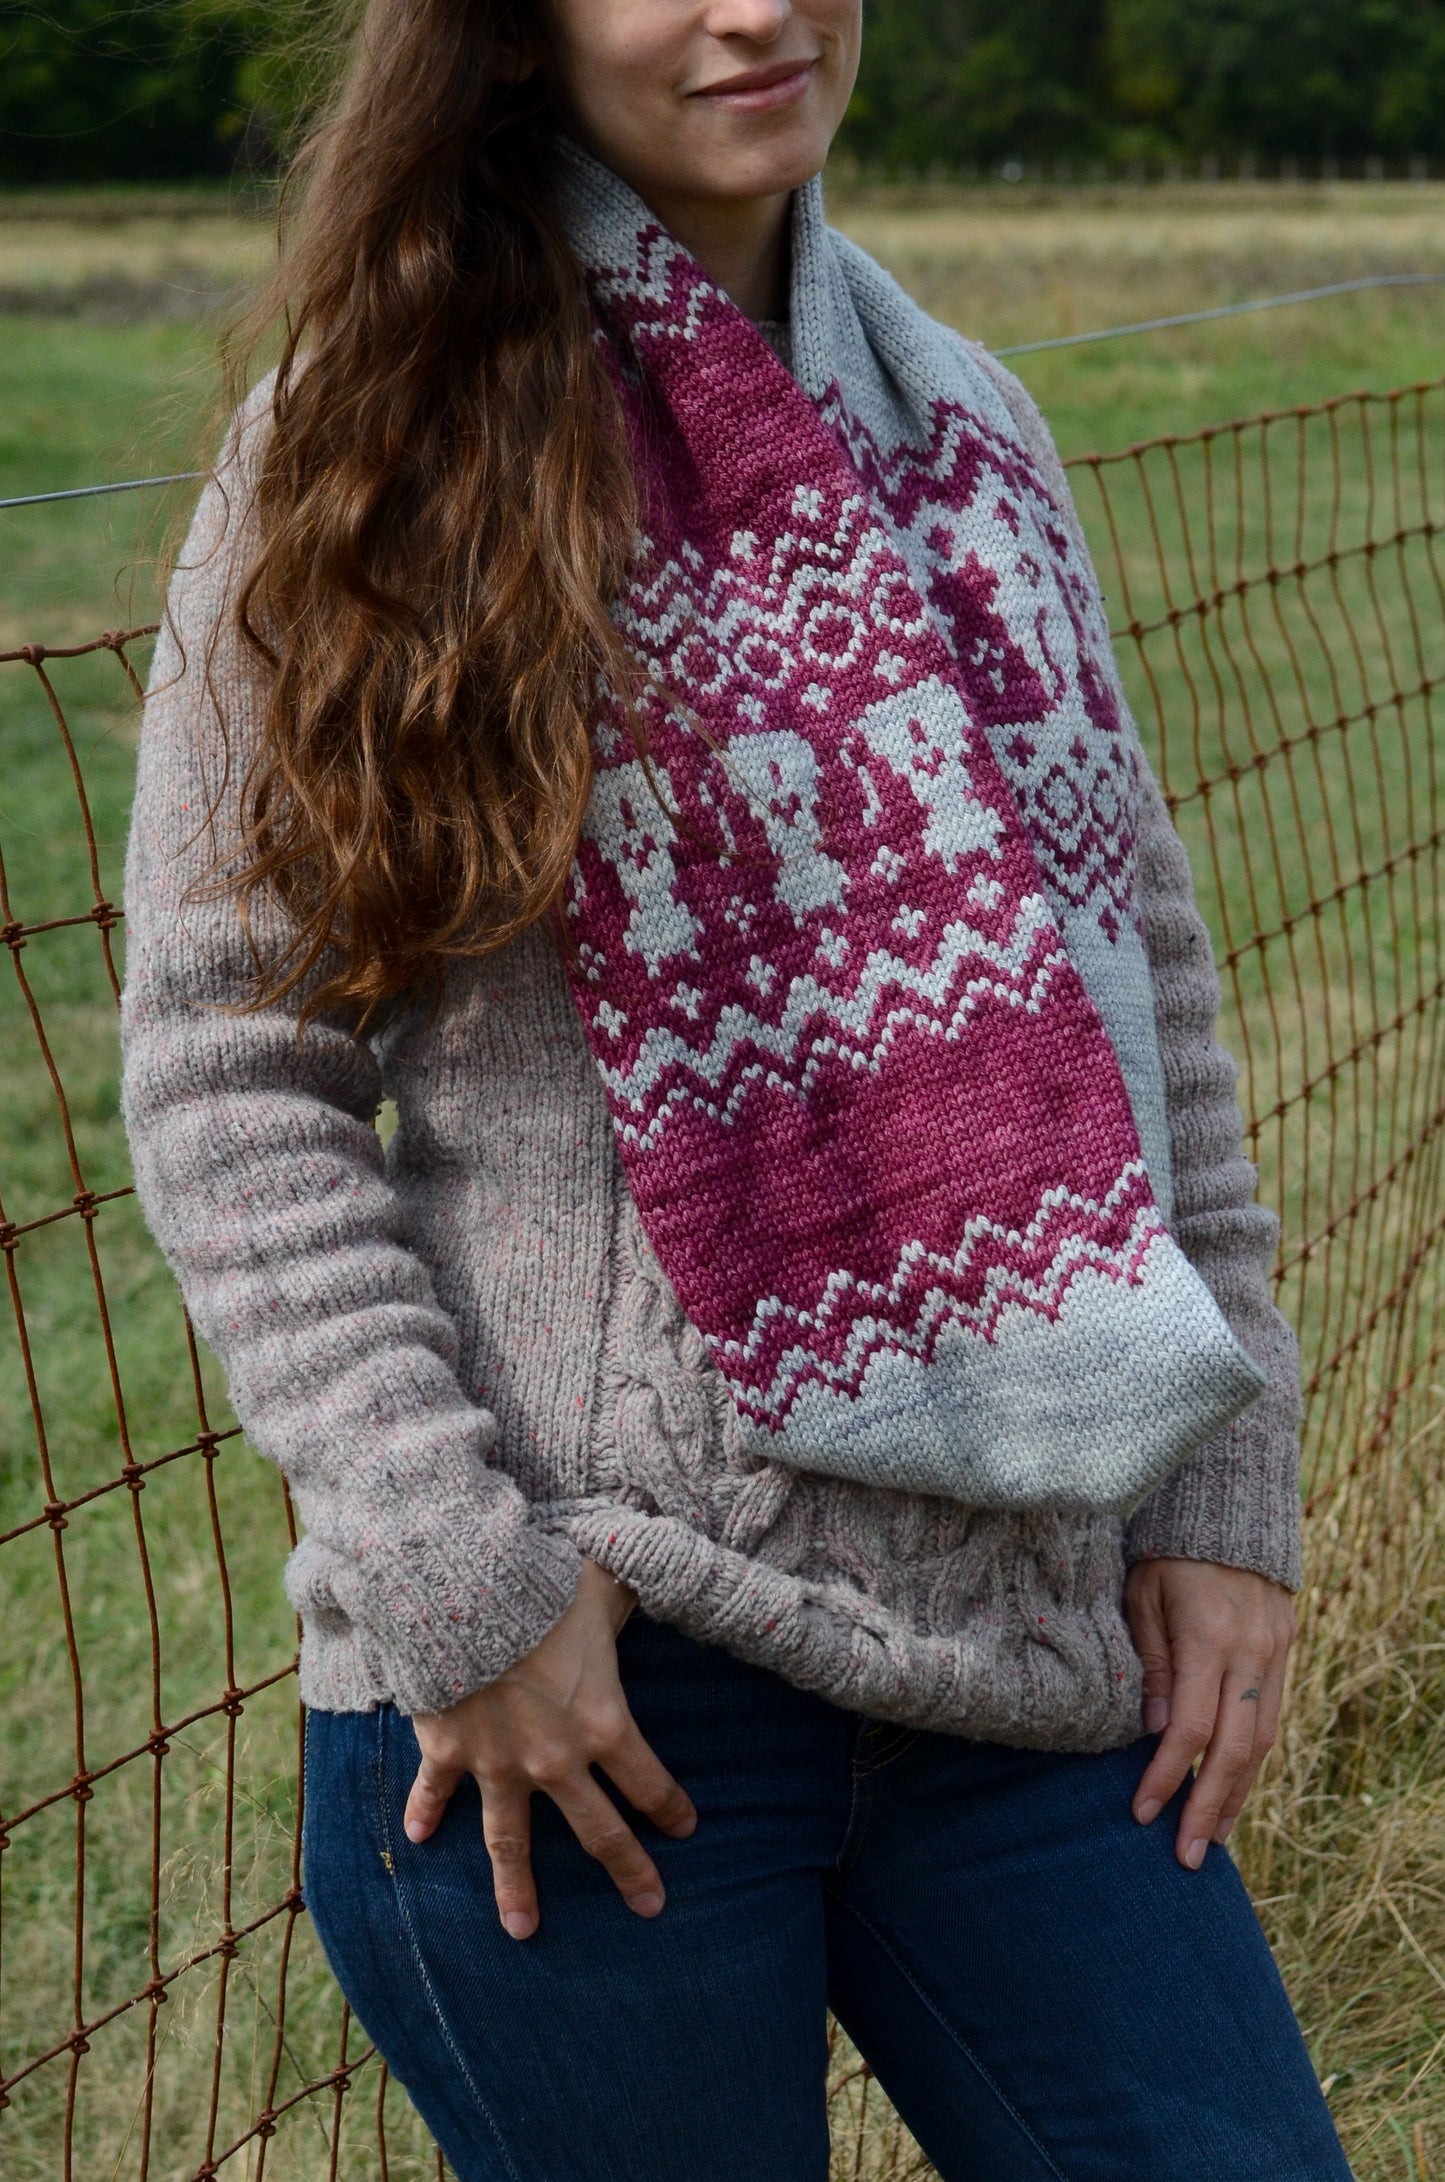 The Familiar Cowl Knitting Kit - Yarn and Digital Pattern